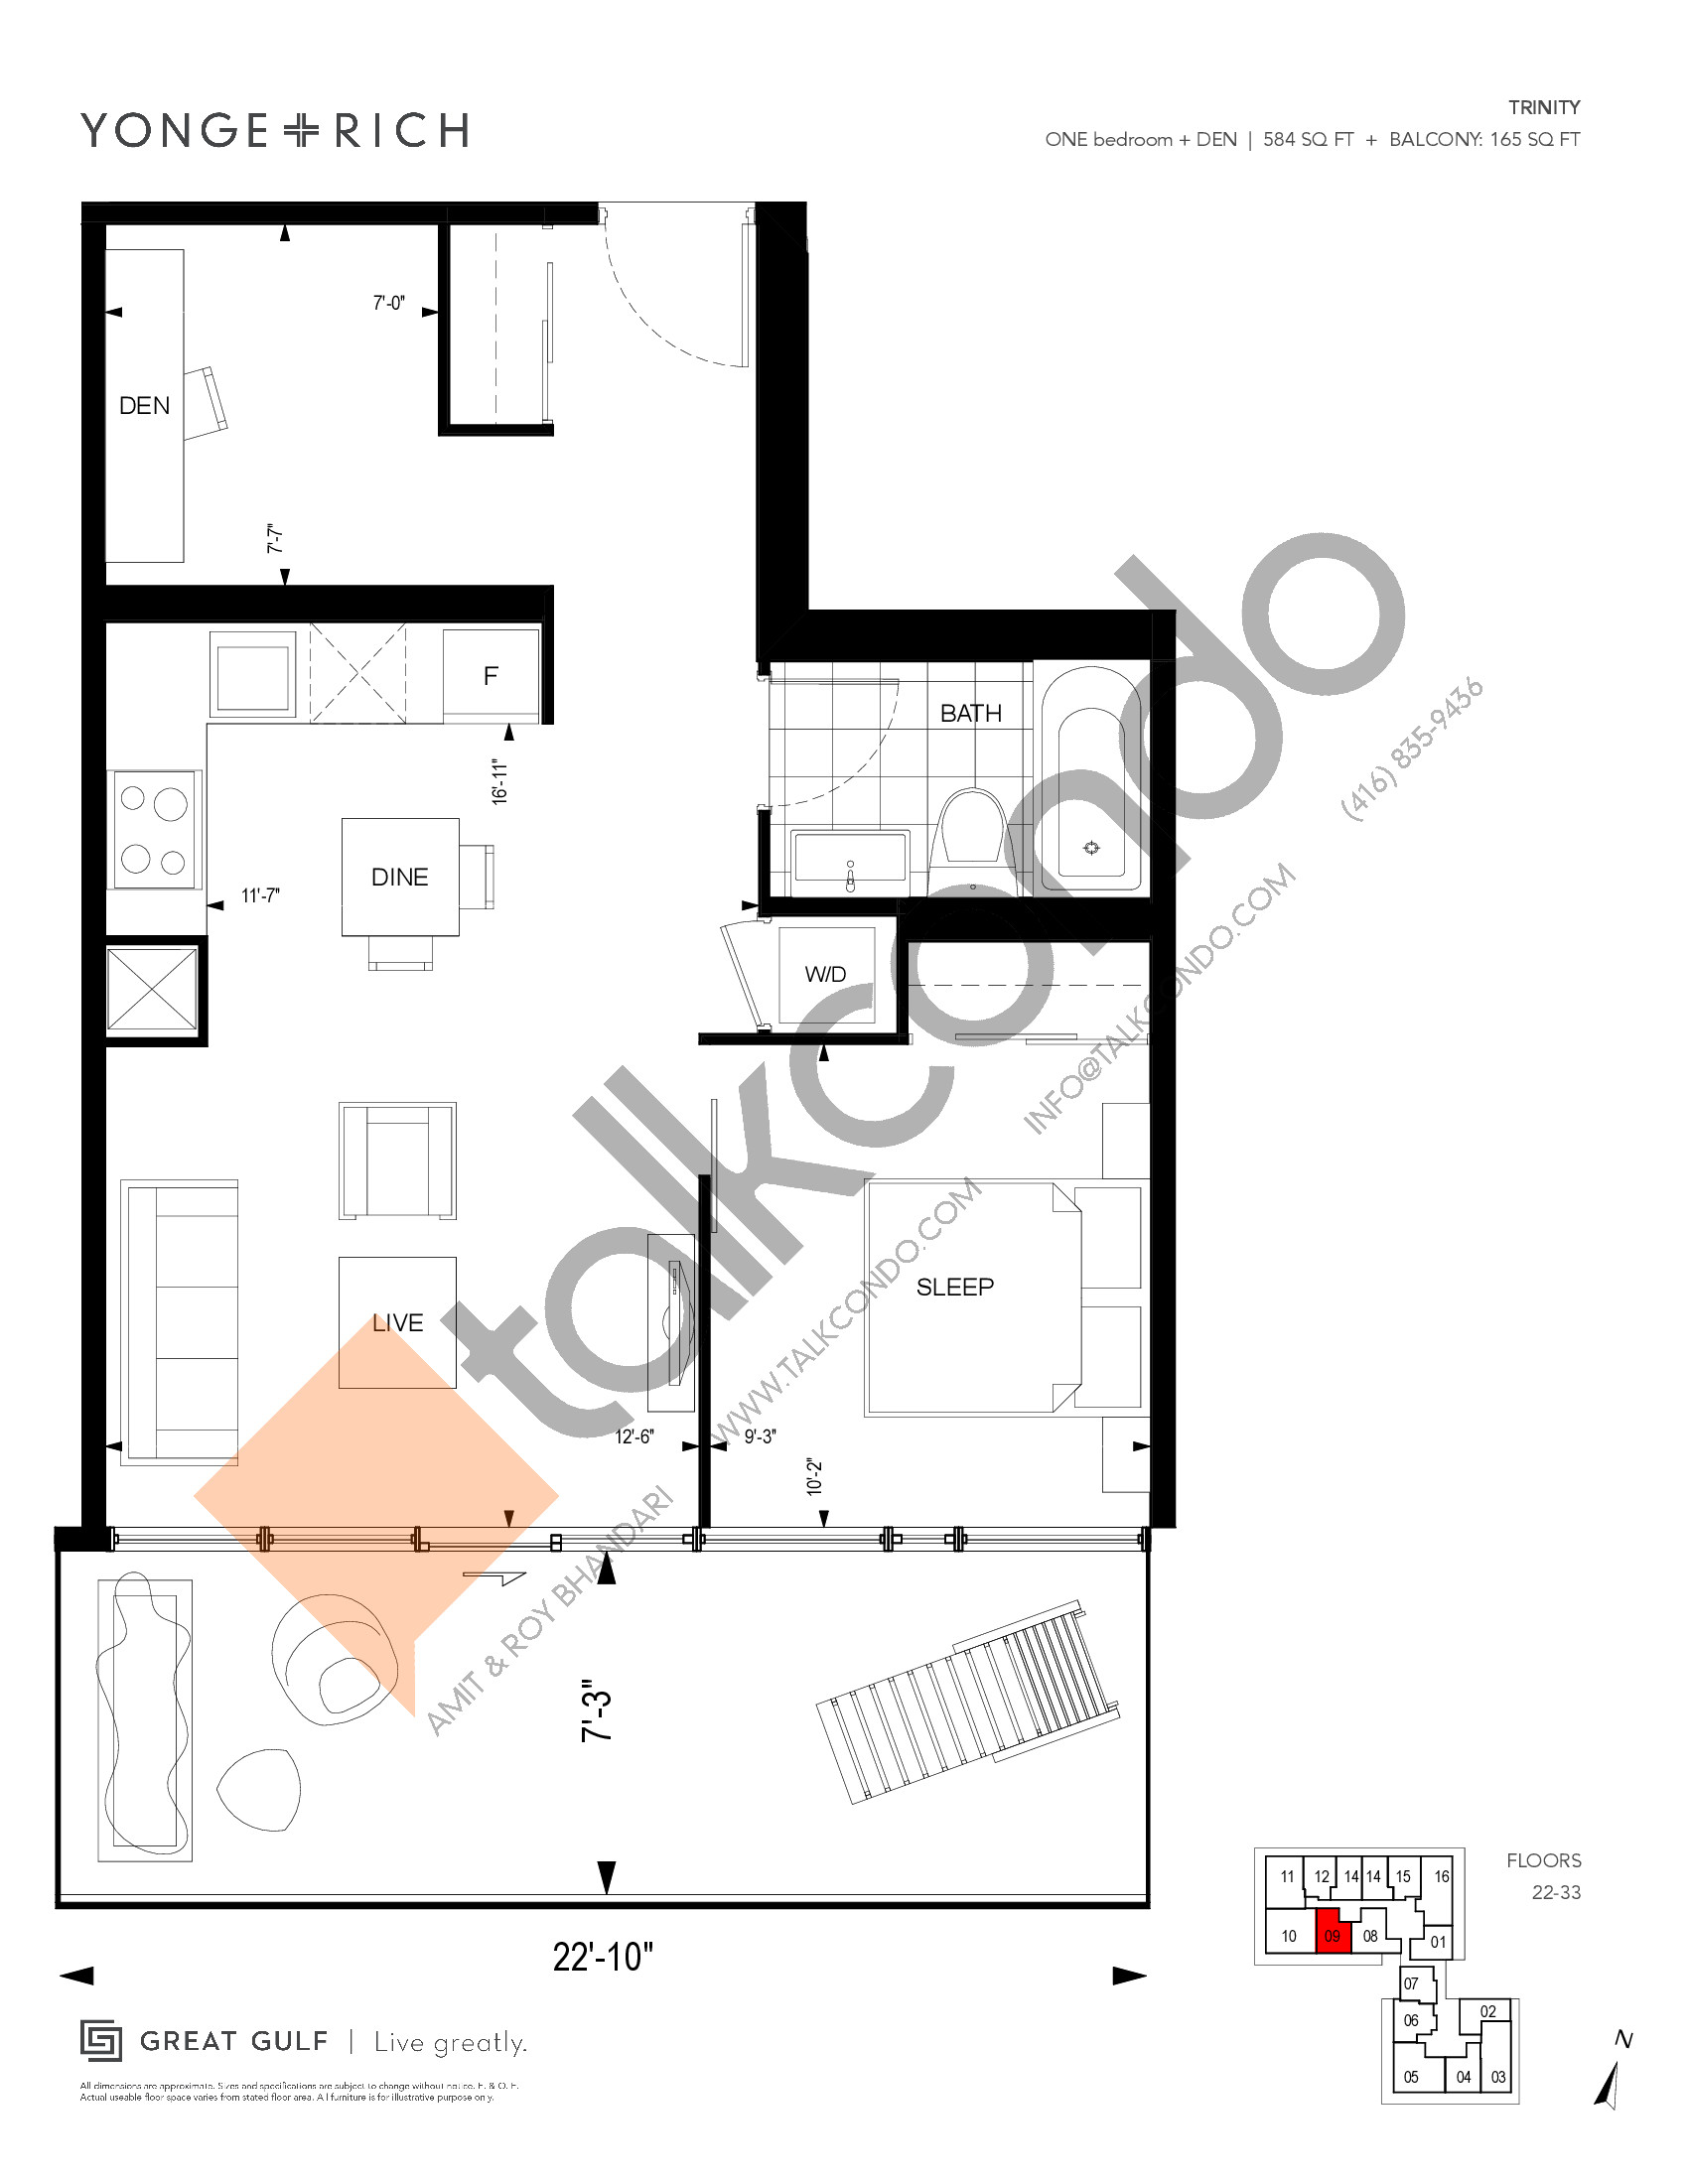 Yonge + Rich Condos Chestnut 494 sq.ft. 1 bedroom